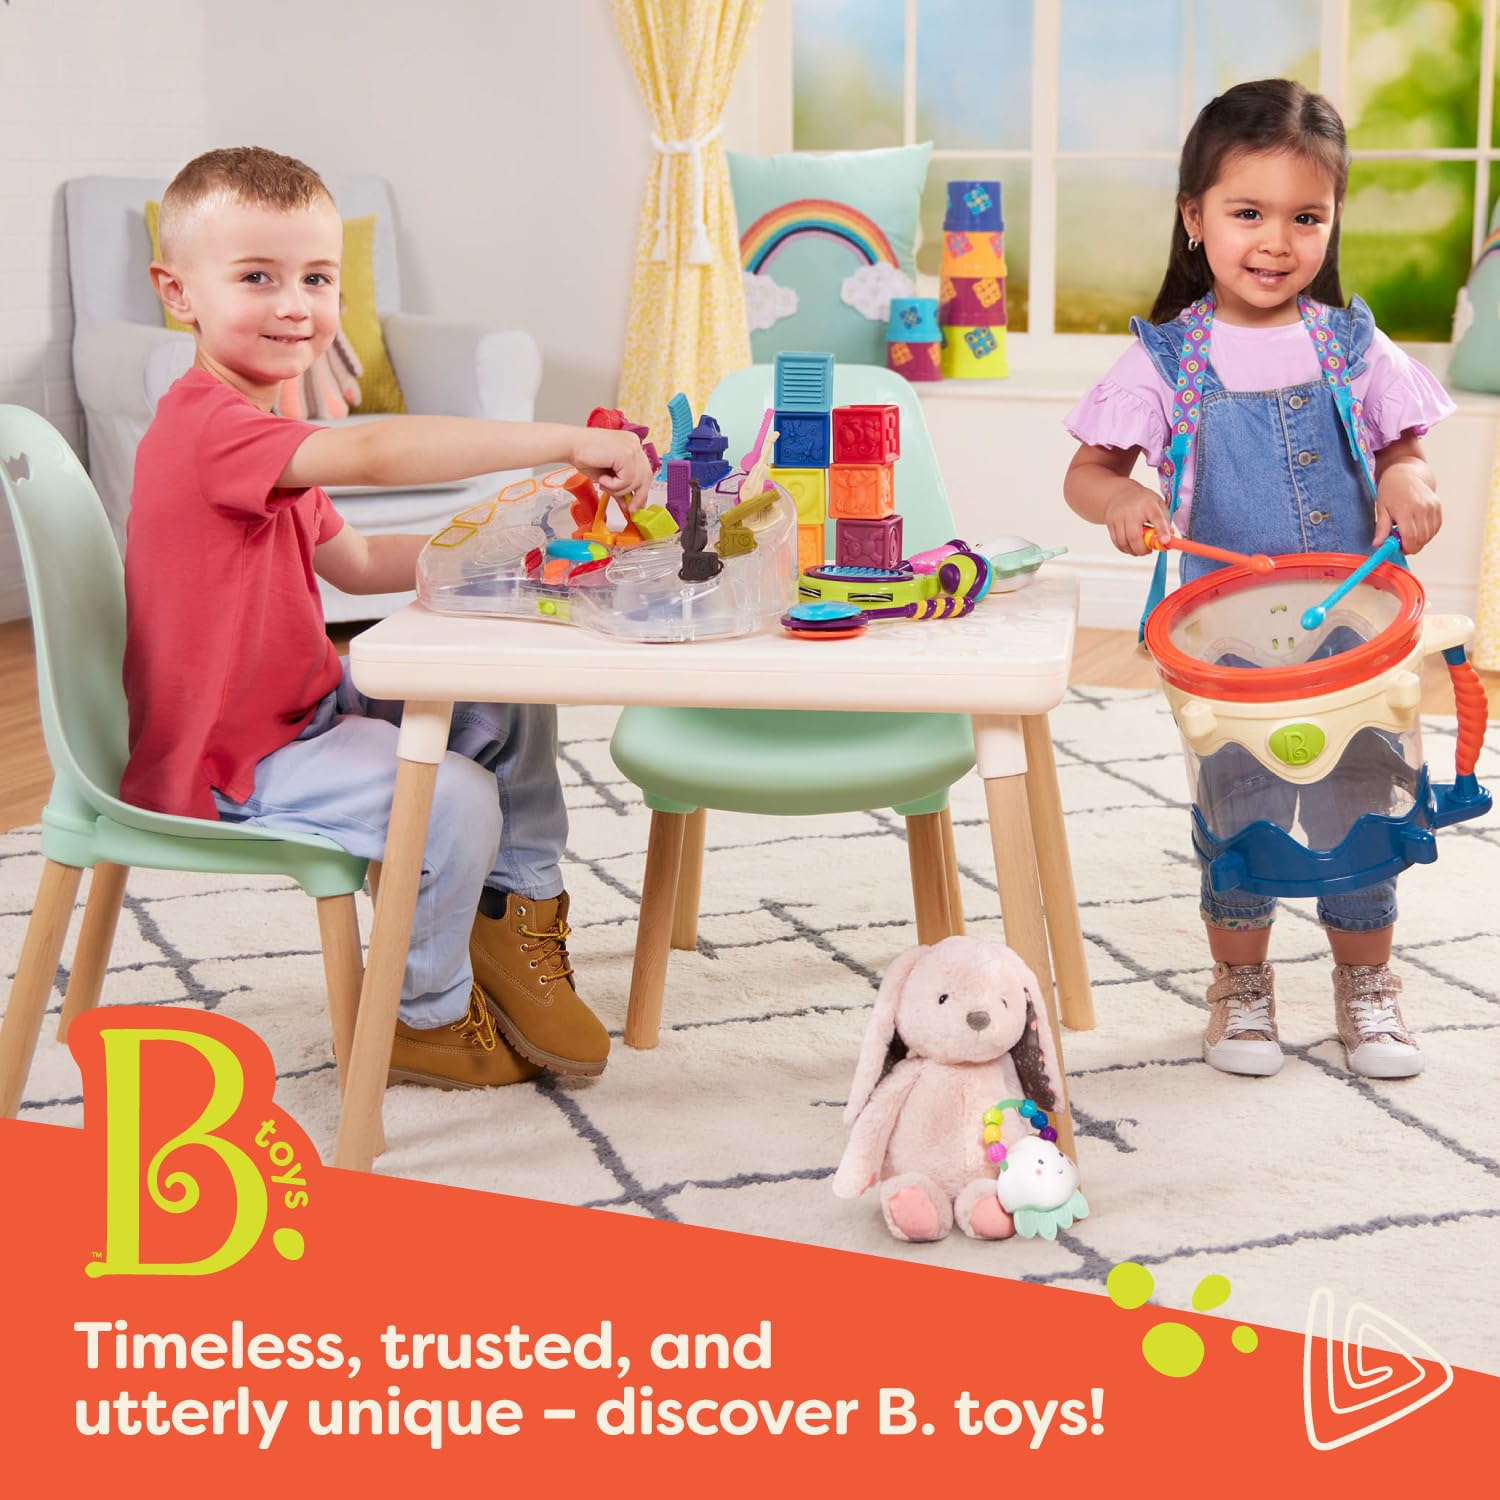 B. toys- Alphabetical Sort & Stack Developmental Baby Blocks- 26 soft blocks for kids & babys- Elemenosqueeze- 6 months +